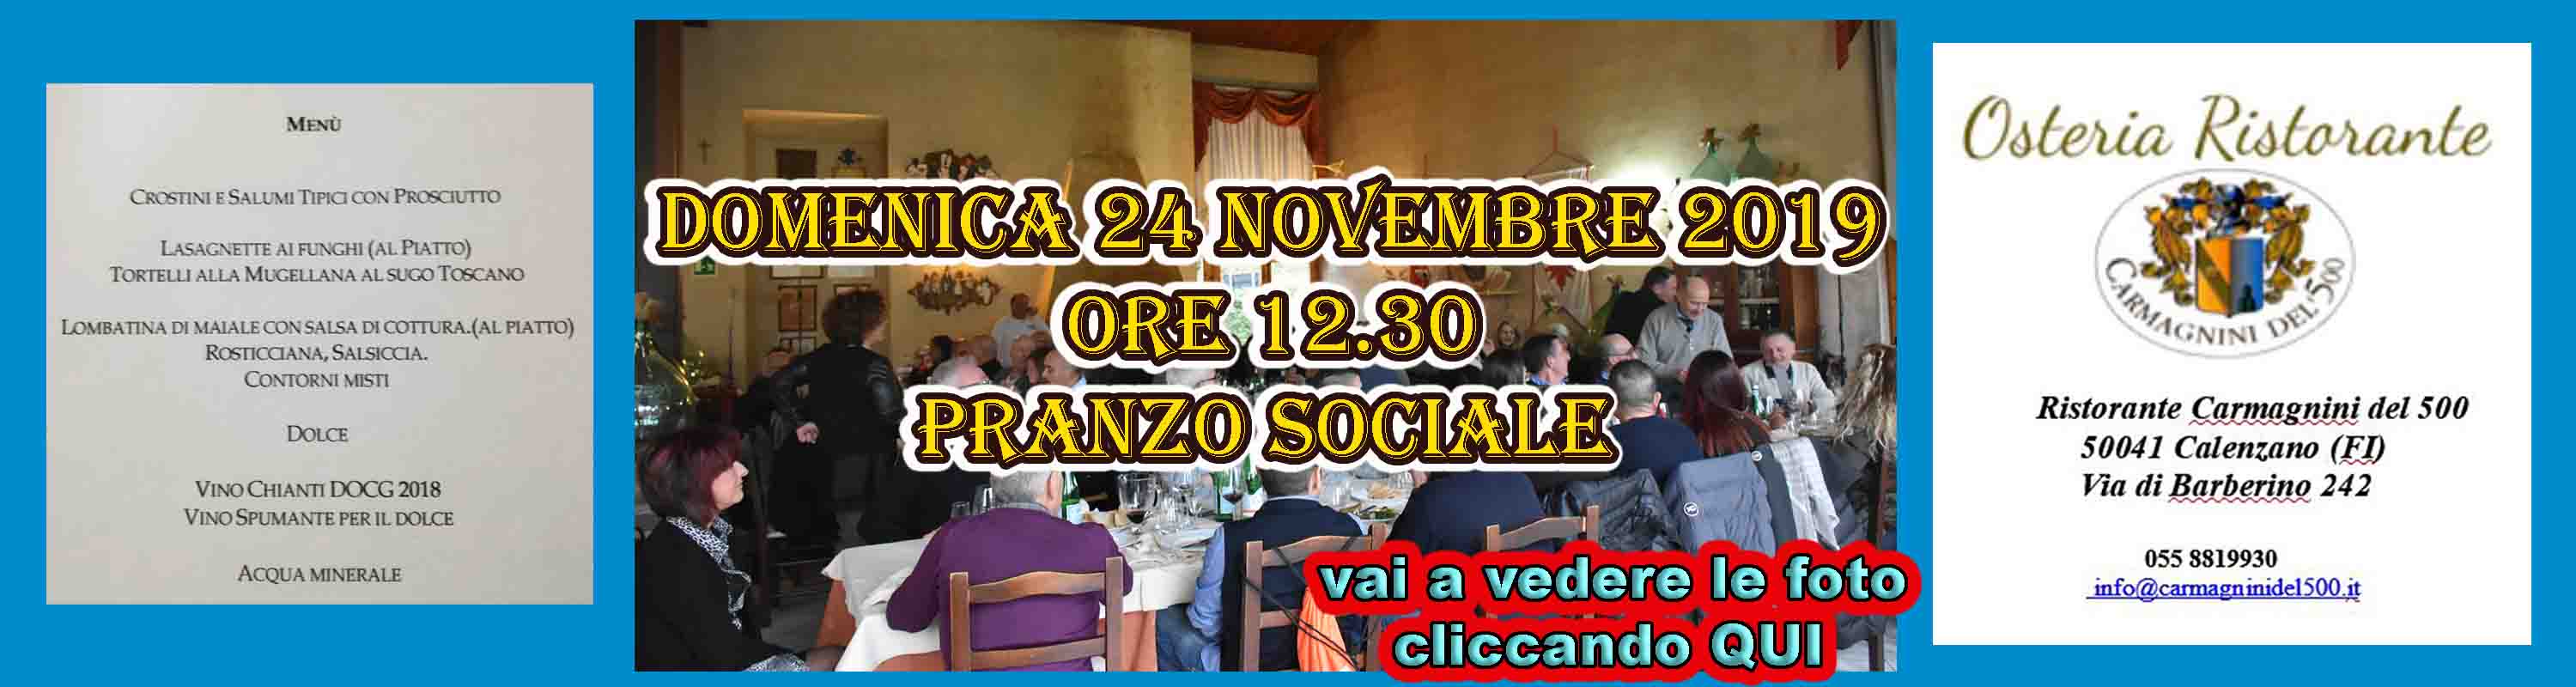 191124_Banner_Pranzo_Sociale_2019